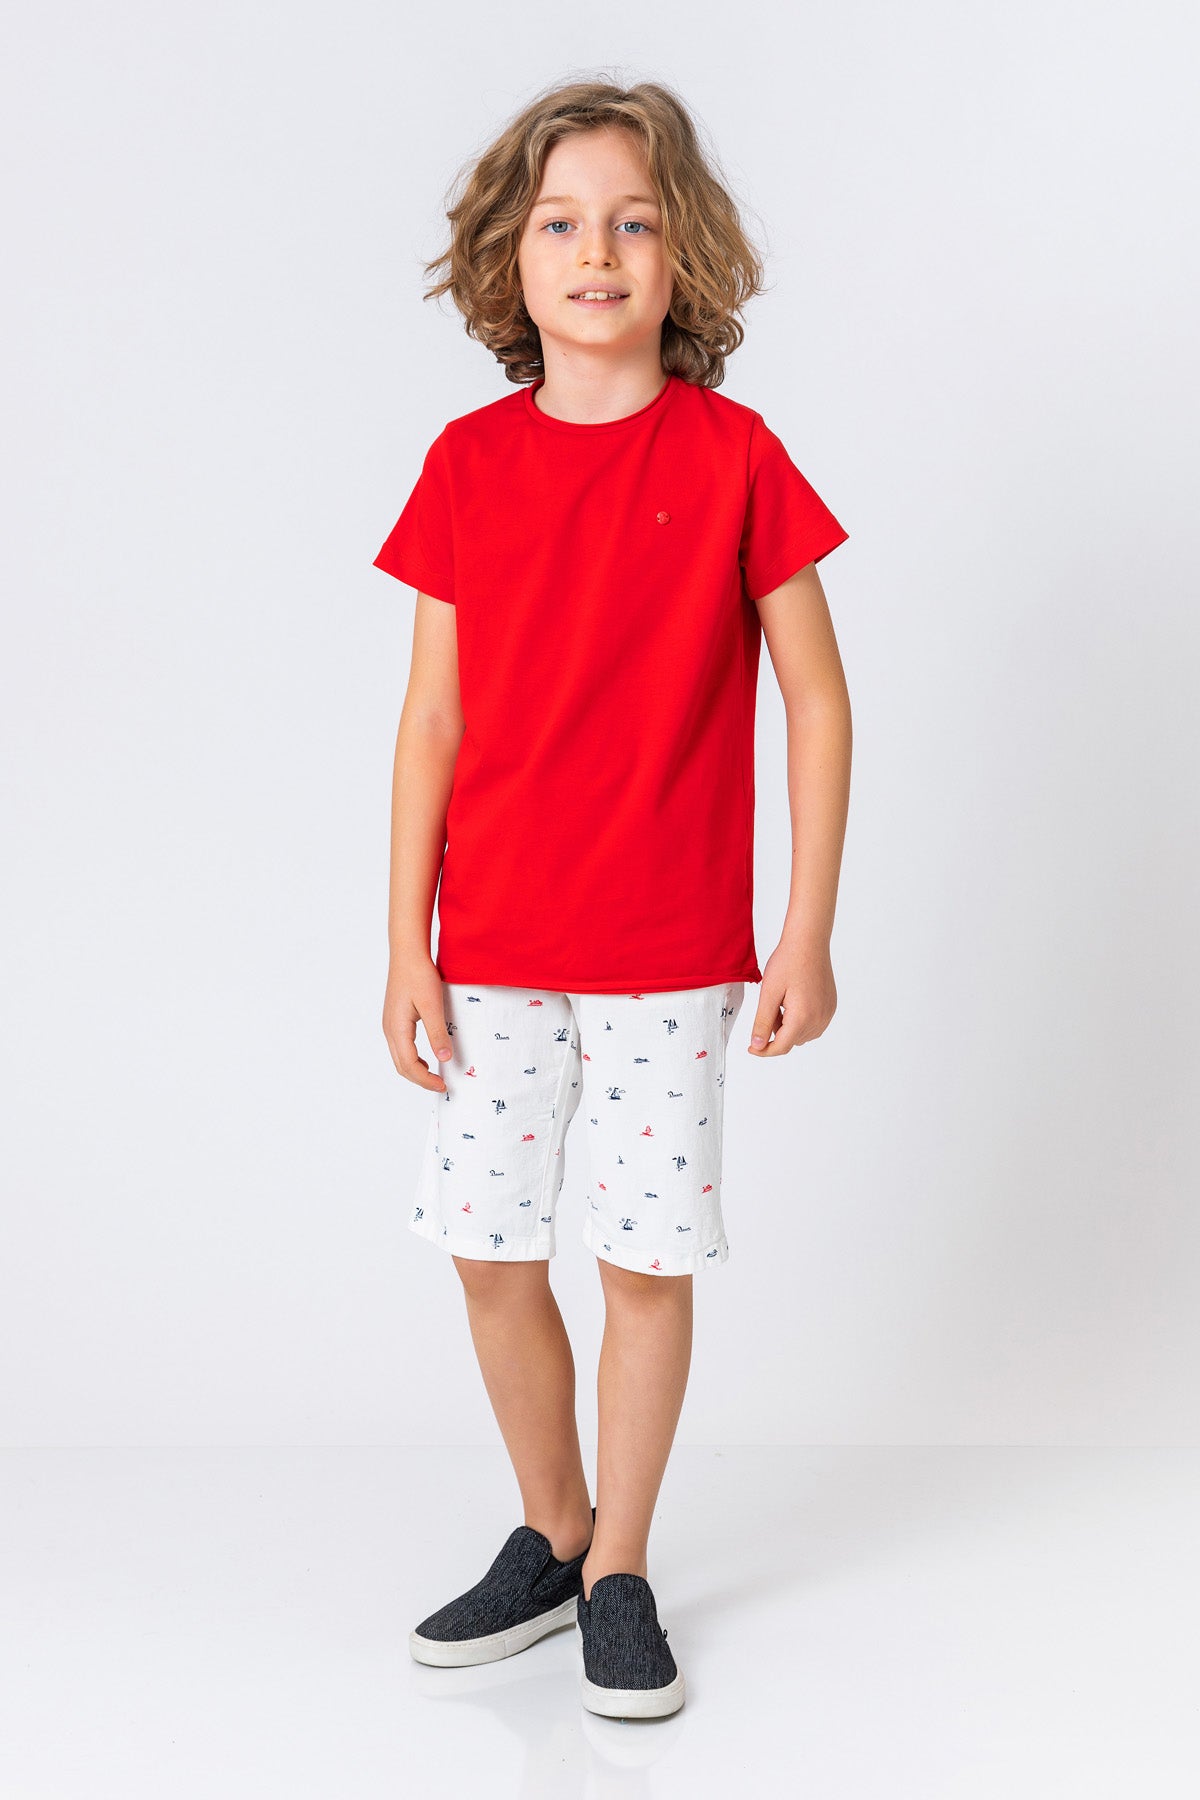 InCity Kids Boys Neck Short T-Shirt Solid Plain Sleeve Round Basic